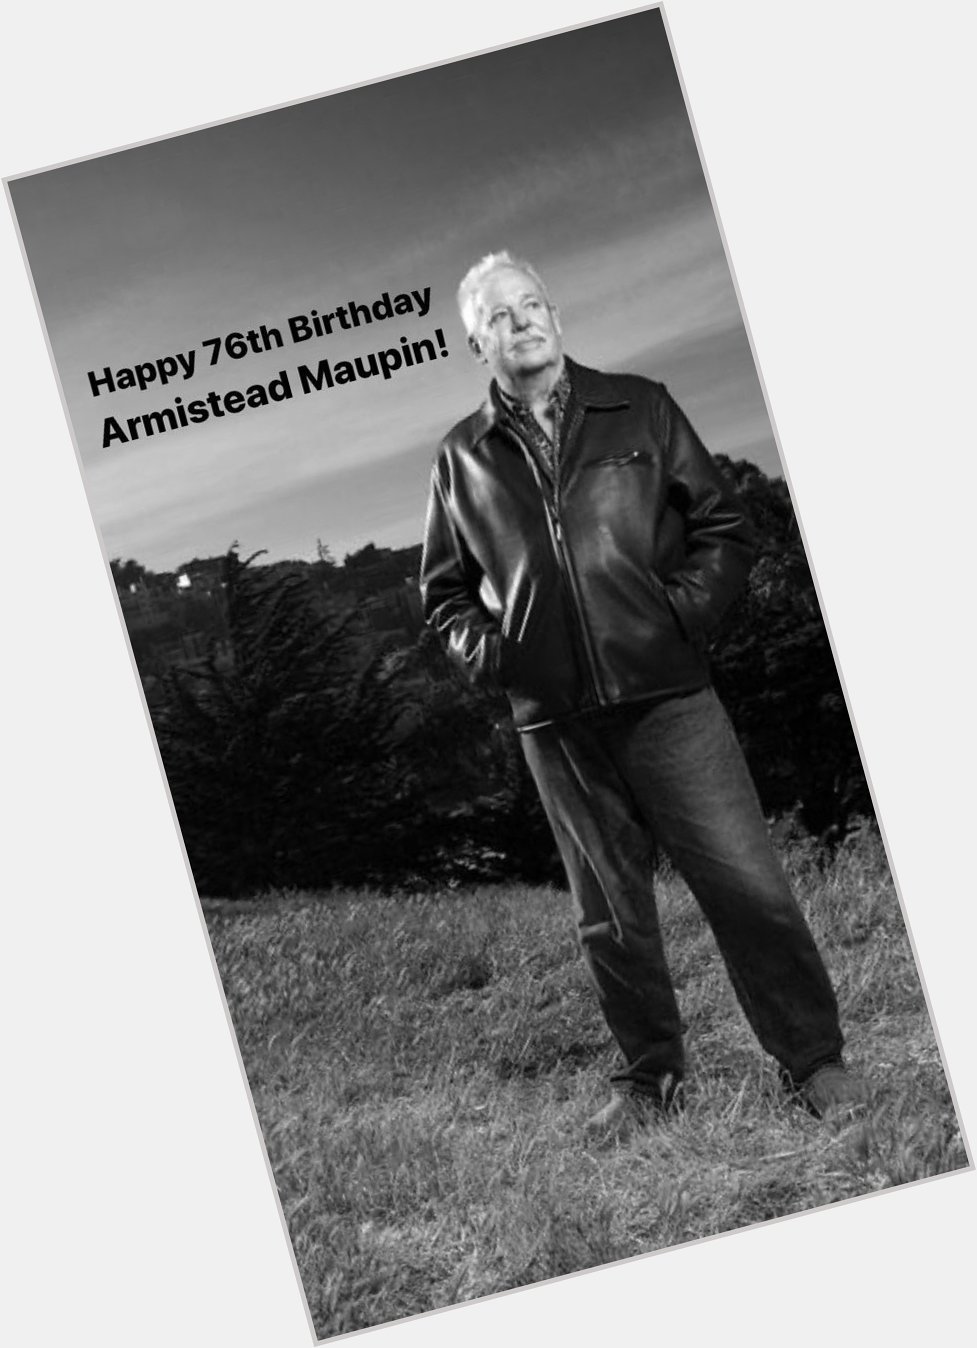 Happy Birthday to Armistead Maupin! 